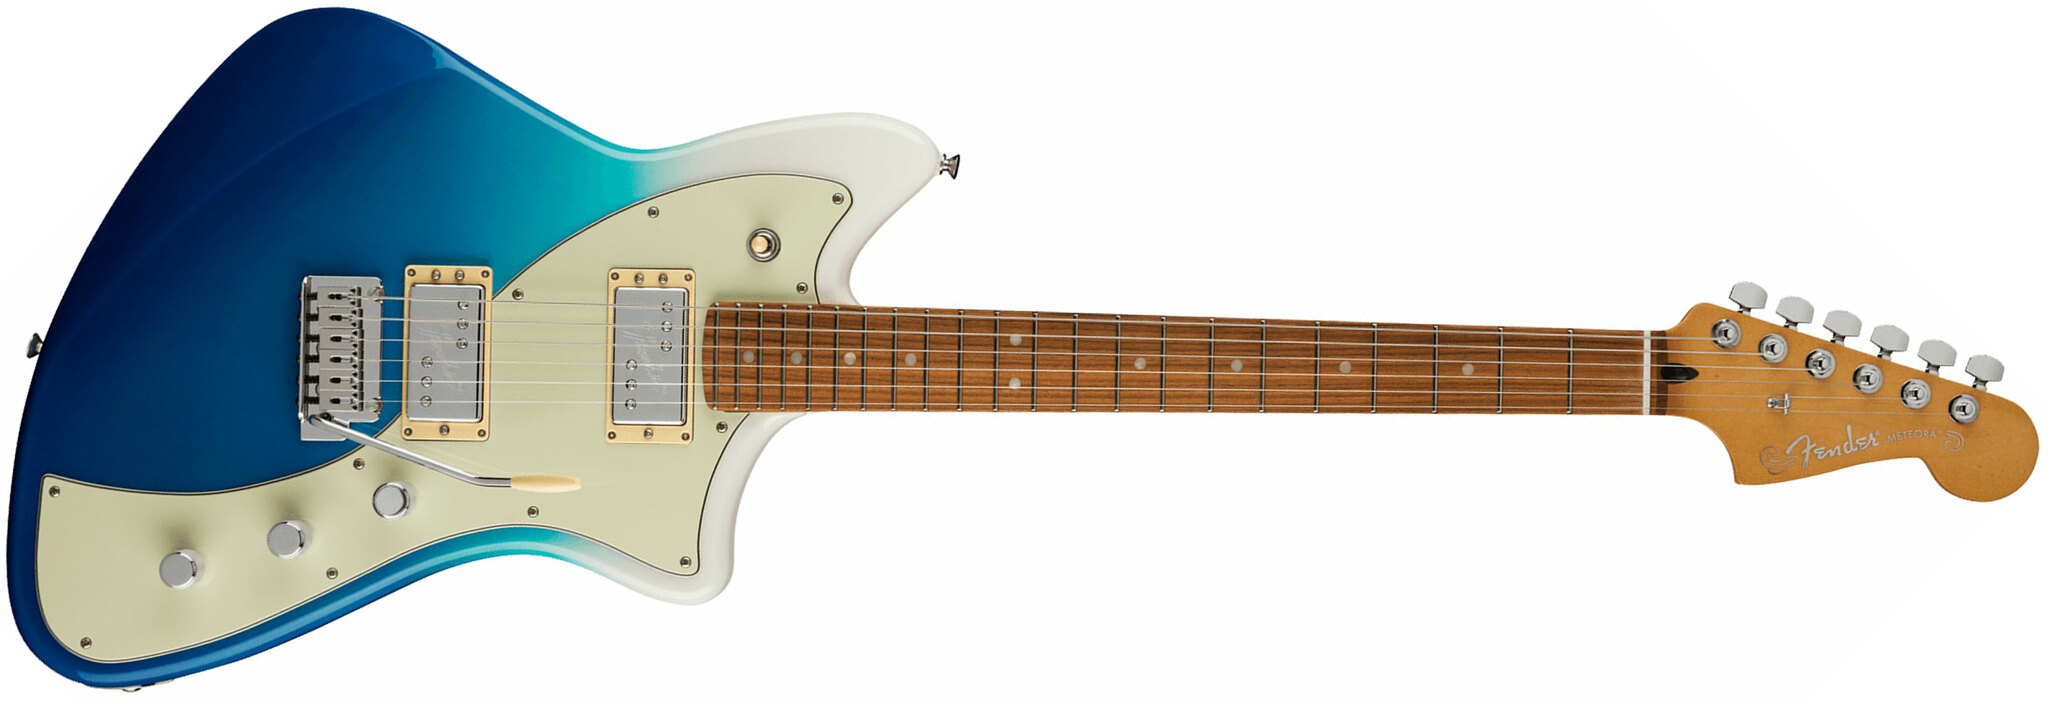 Fender Meteora Player Plus Hh Mex 2h Ht Pf - Belair Blue - Retro-rock elektrische gitaar - Main picture